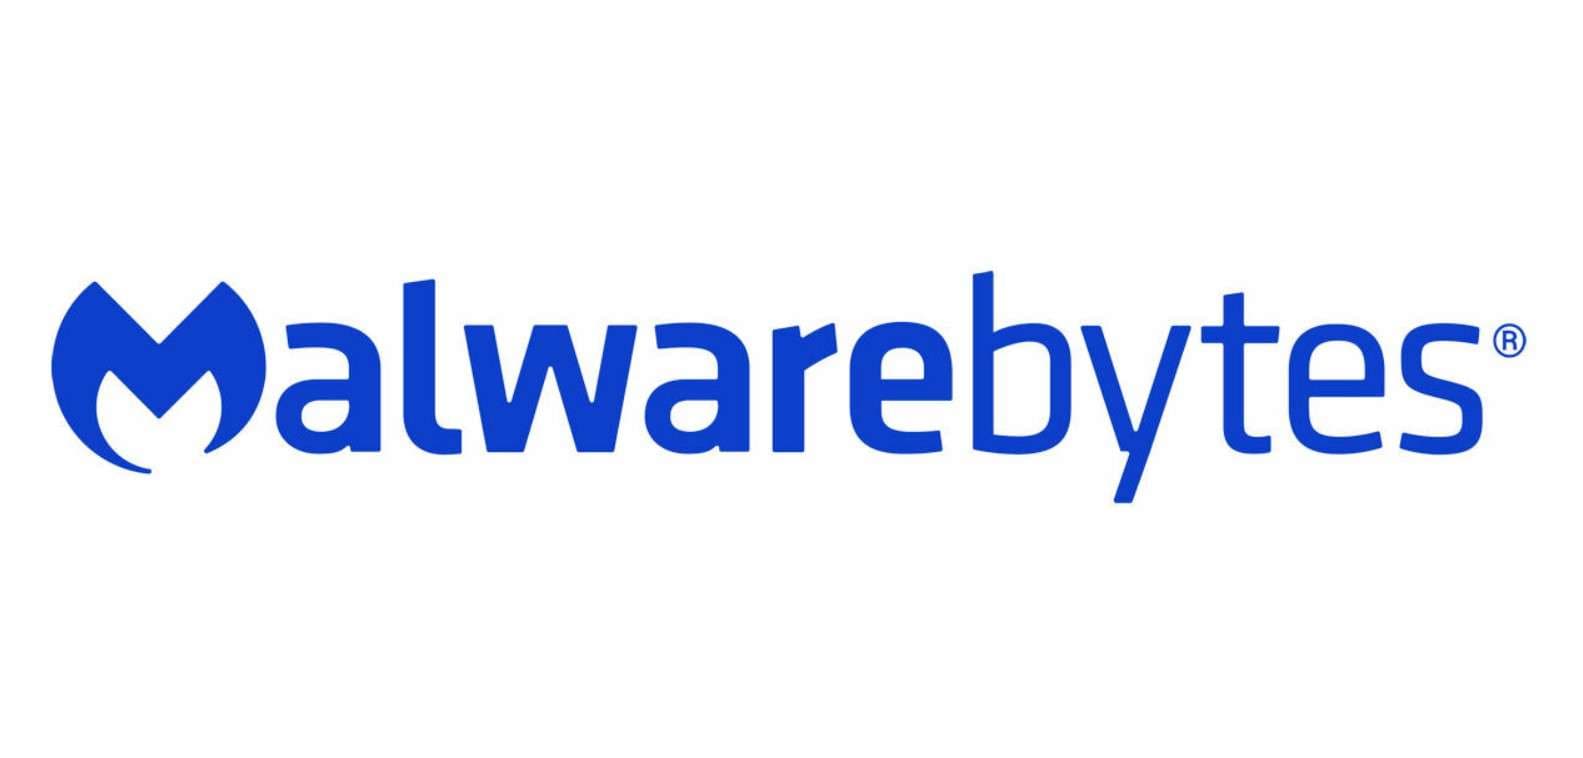 malwarebytes antivirus logo